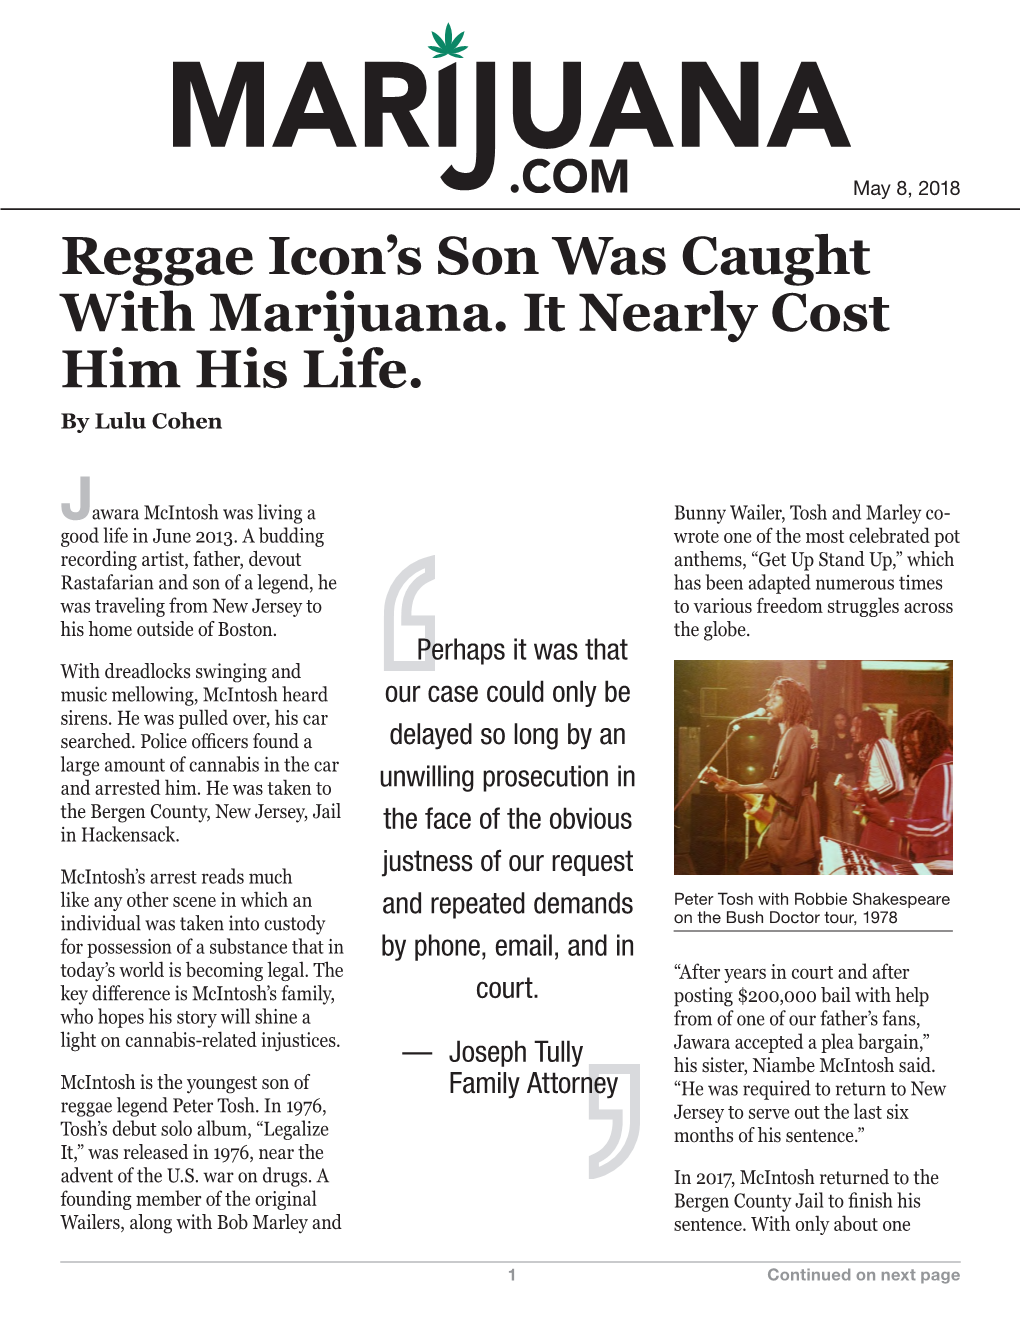 Reggae Icon's Son Was Caught with Marijuana. It